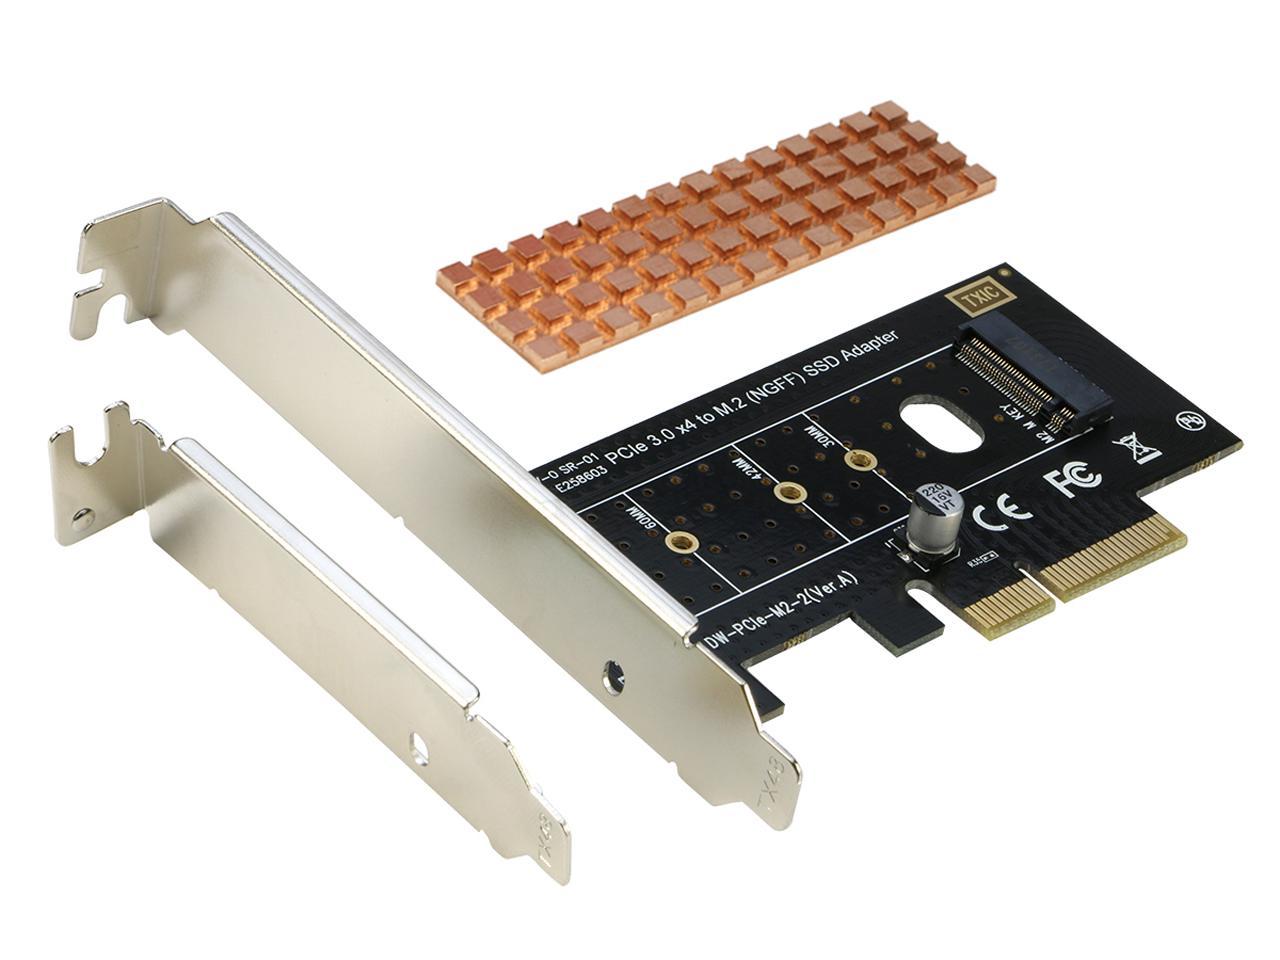 Akvarium ubehageligt Machu Picchu M Key M.2 PCIe NGFF SSD to PCI-e Express 3.0 x4 Adapter Card Controller  with Heatsink for 2230 2242 2260 2280 mm M Key M.2 PCIe Based AHCI NVMe SSD  - Newegg.com